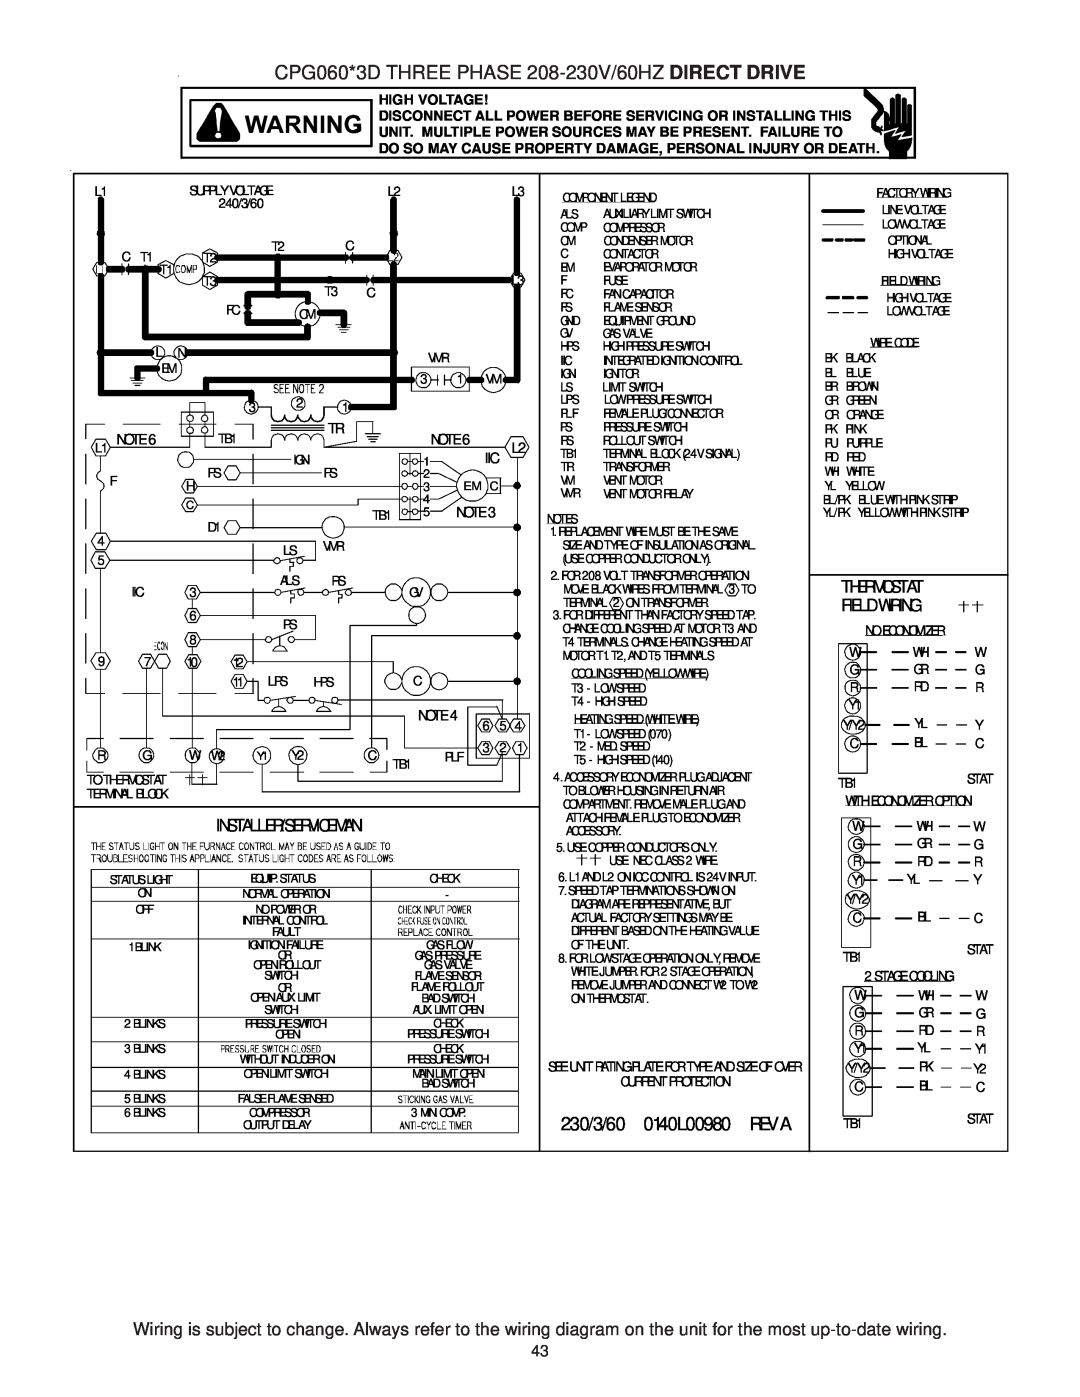 Goodman Mfg CPG SERIES installation manual CPG060*3D THREE PHASE 208-230V/60HZ DIRECT DRIVE, 230/3/60 0140L00980 REV A 